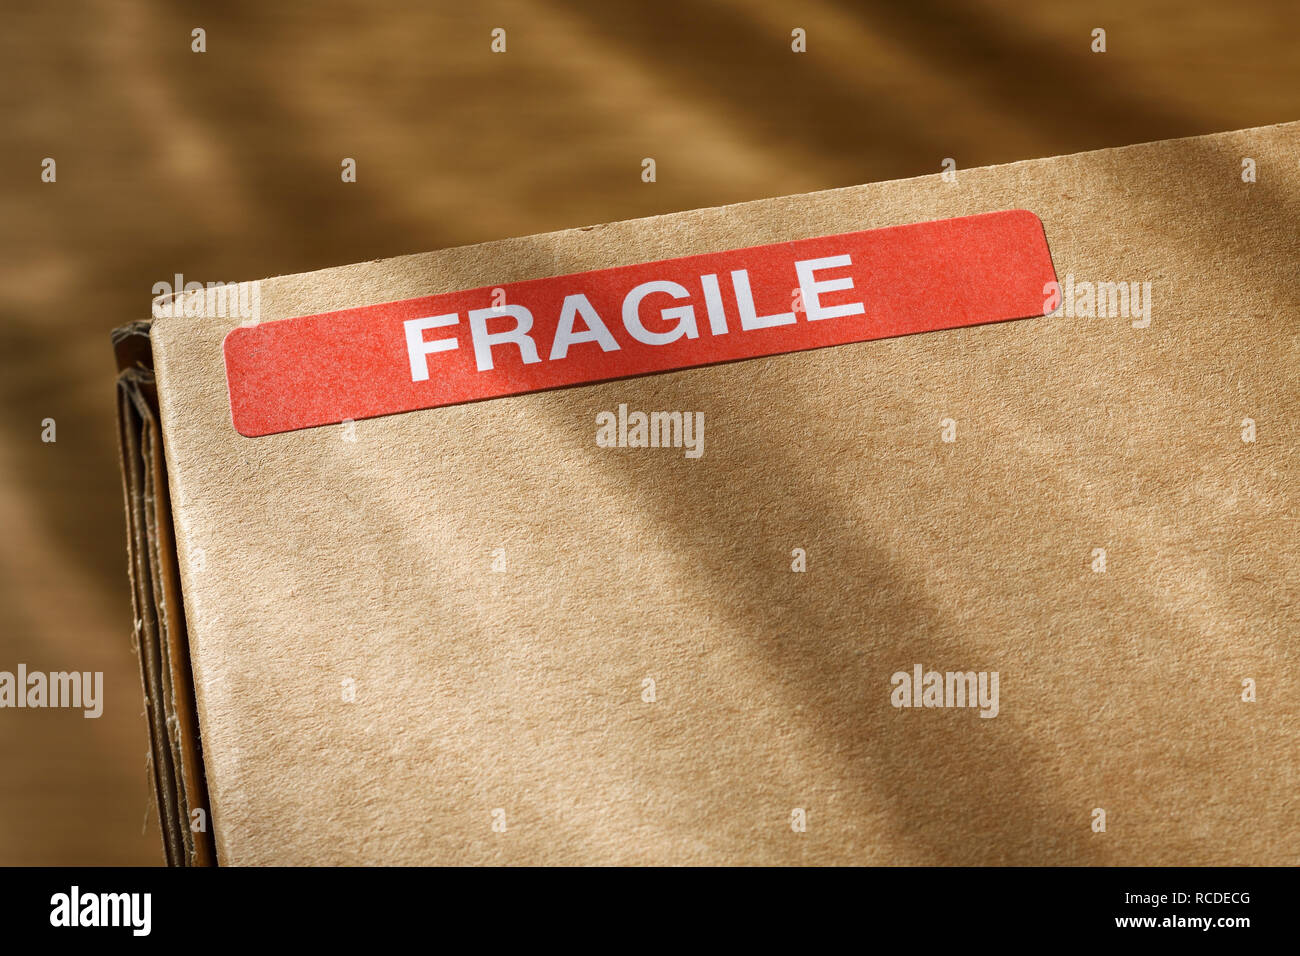 A Fragile sticker on a wcardboard box Stock Photo